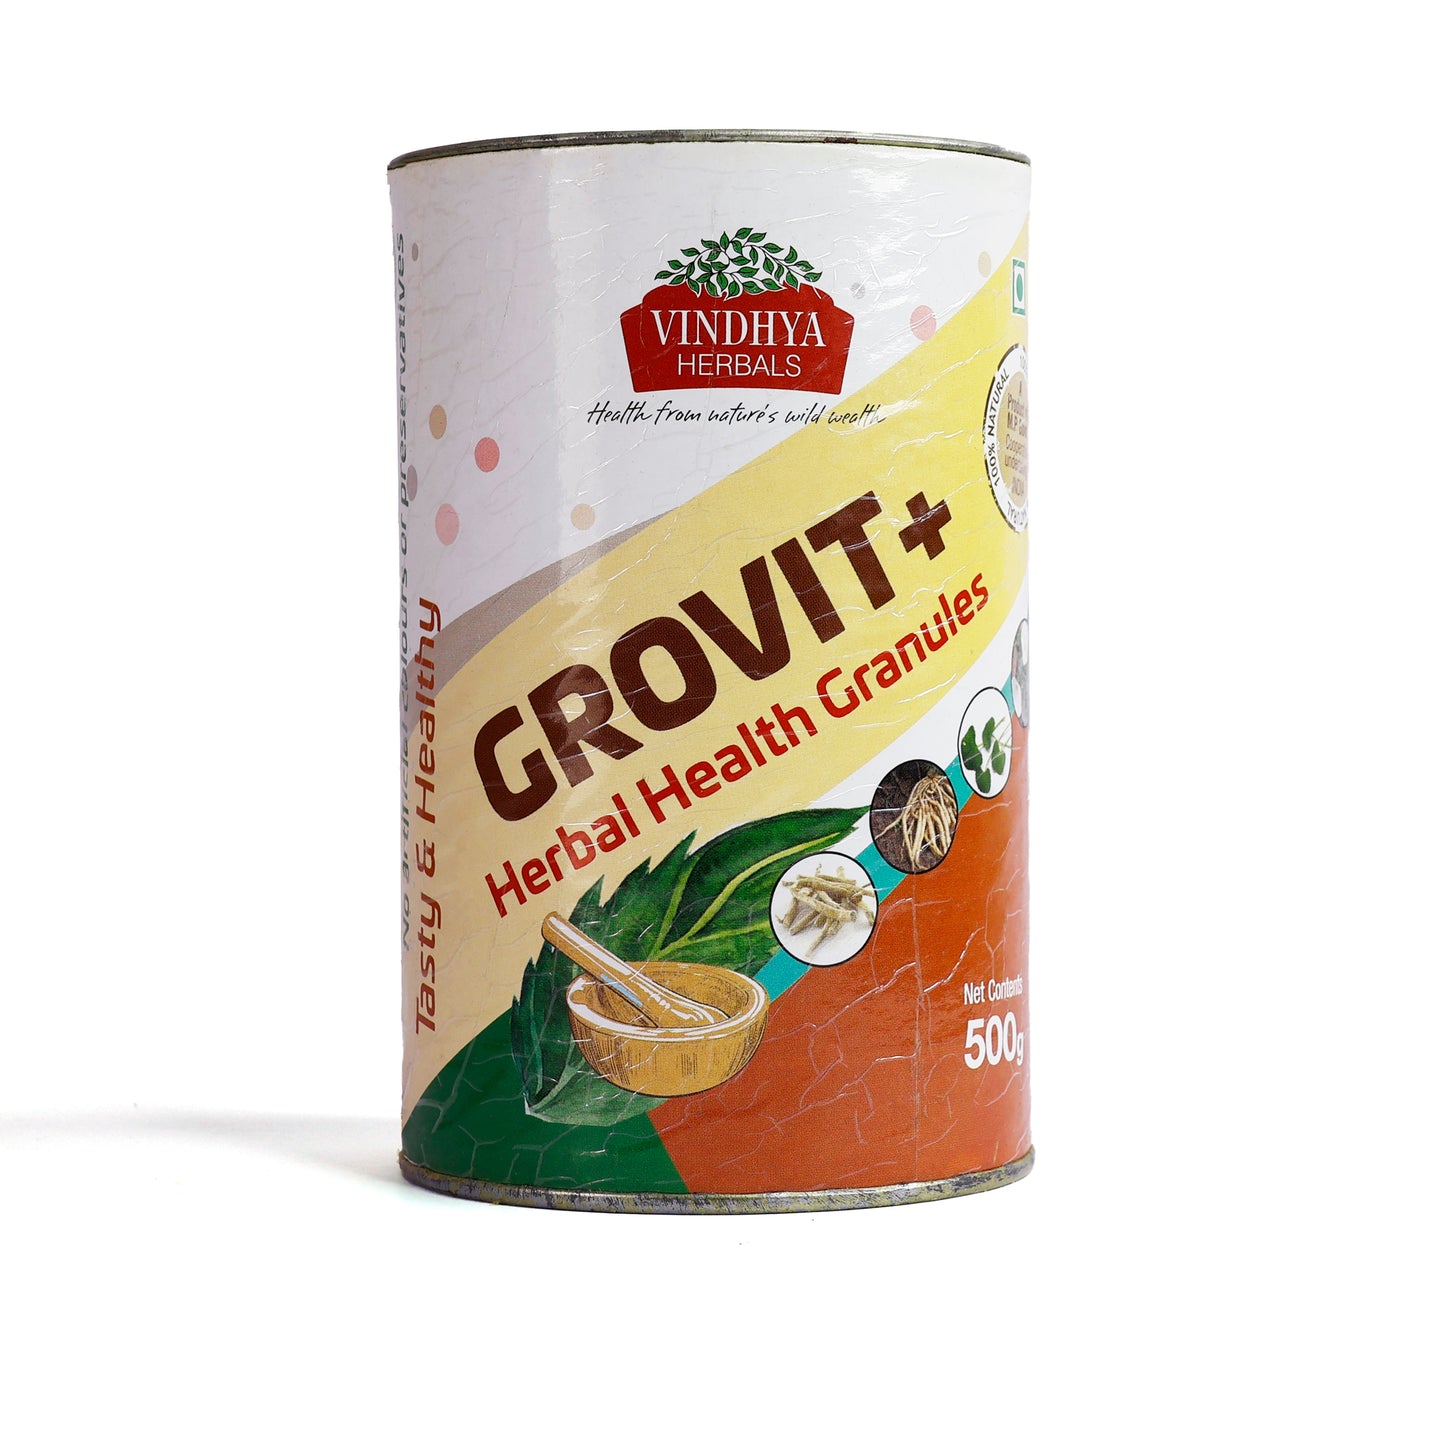 Grovit Plus Granules - Nourishing Growth Elixir